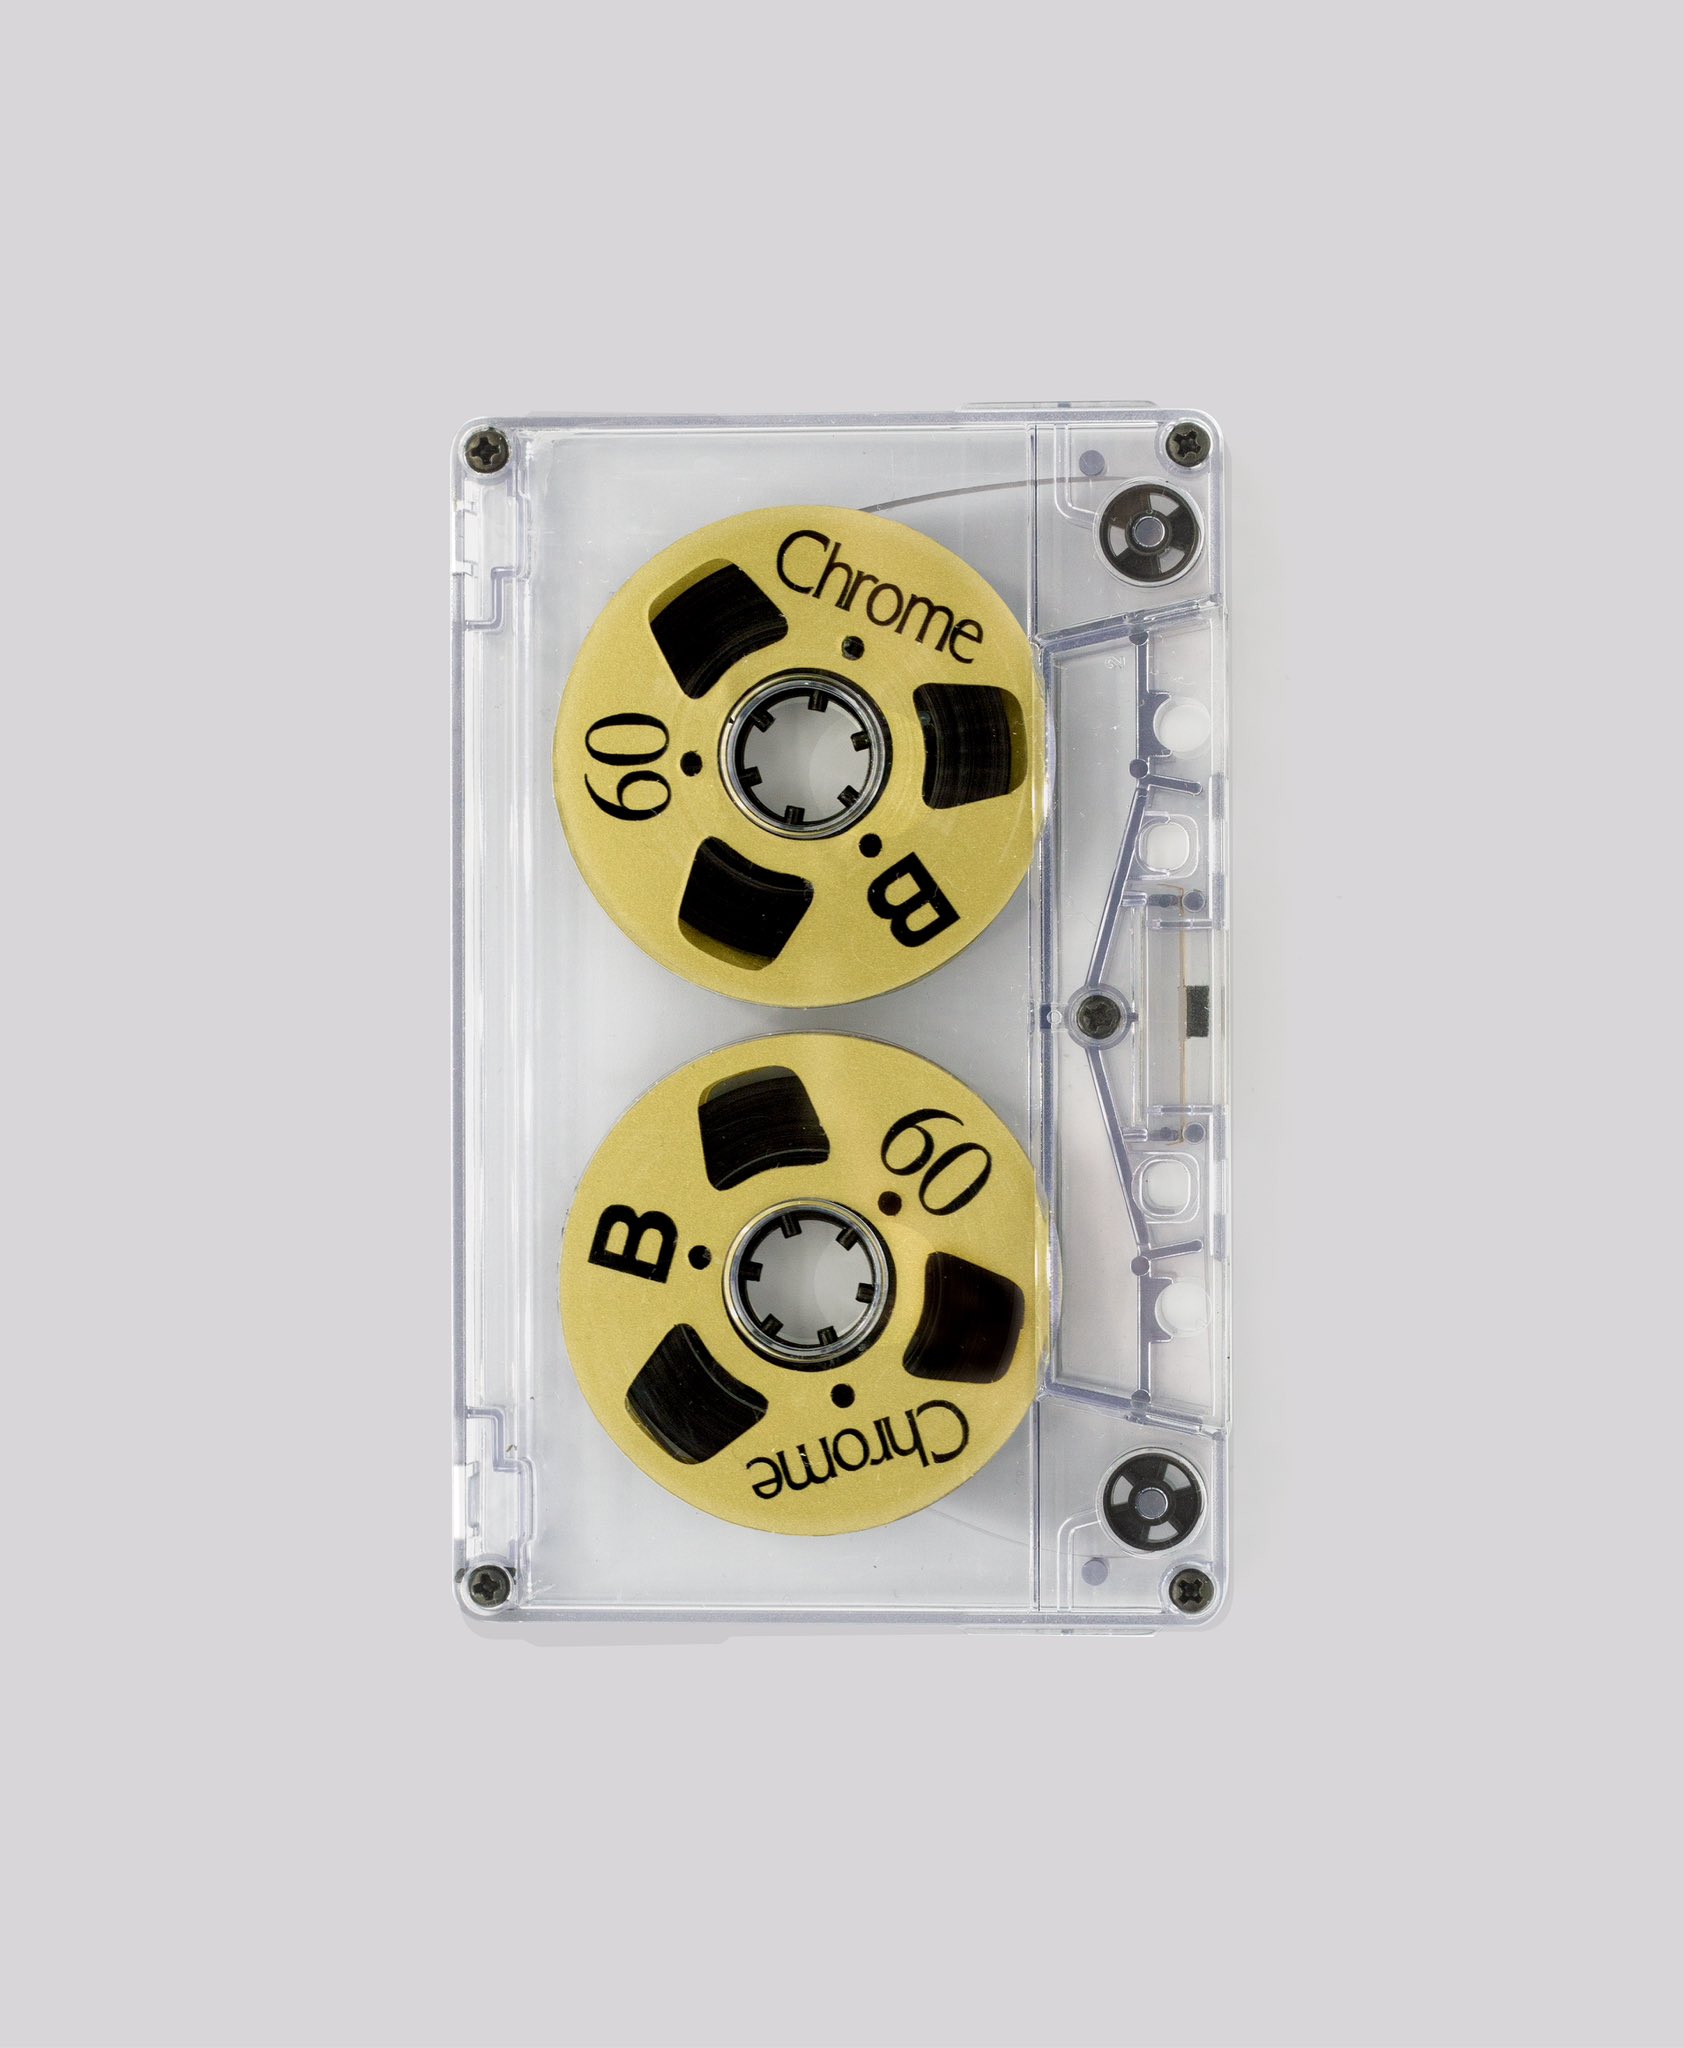 Gonzalo Hergueta on X: Tape prototype for the @DanoZiontifik latest album  🤞🖤  / X